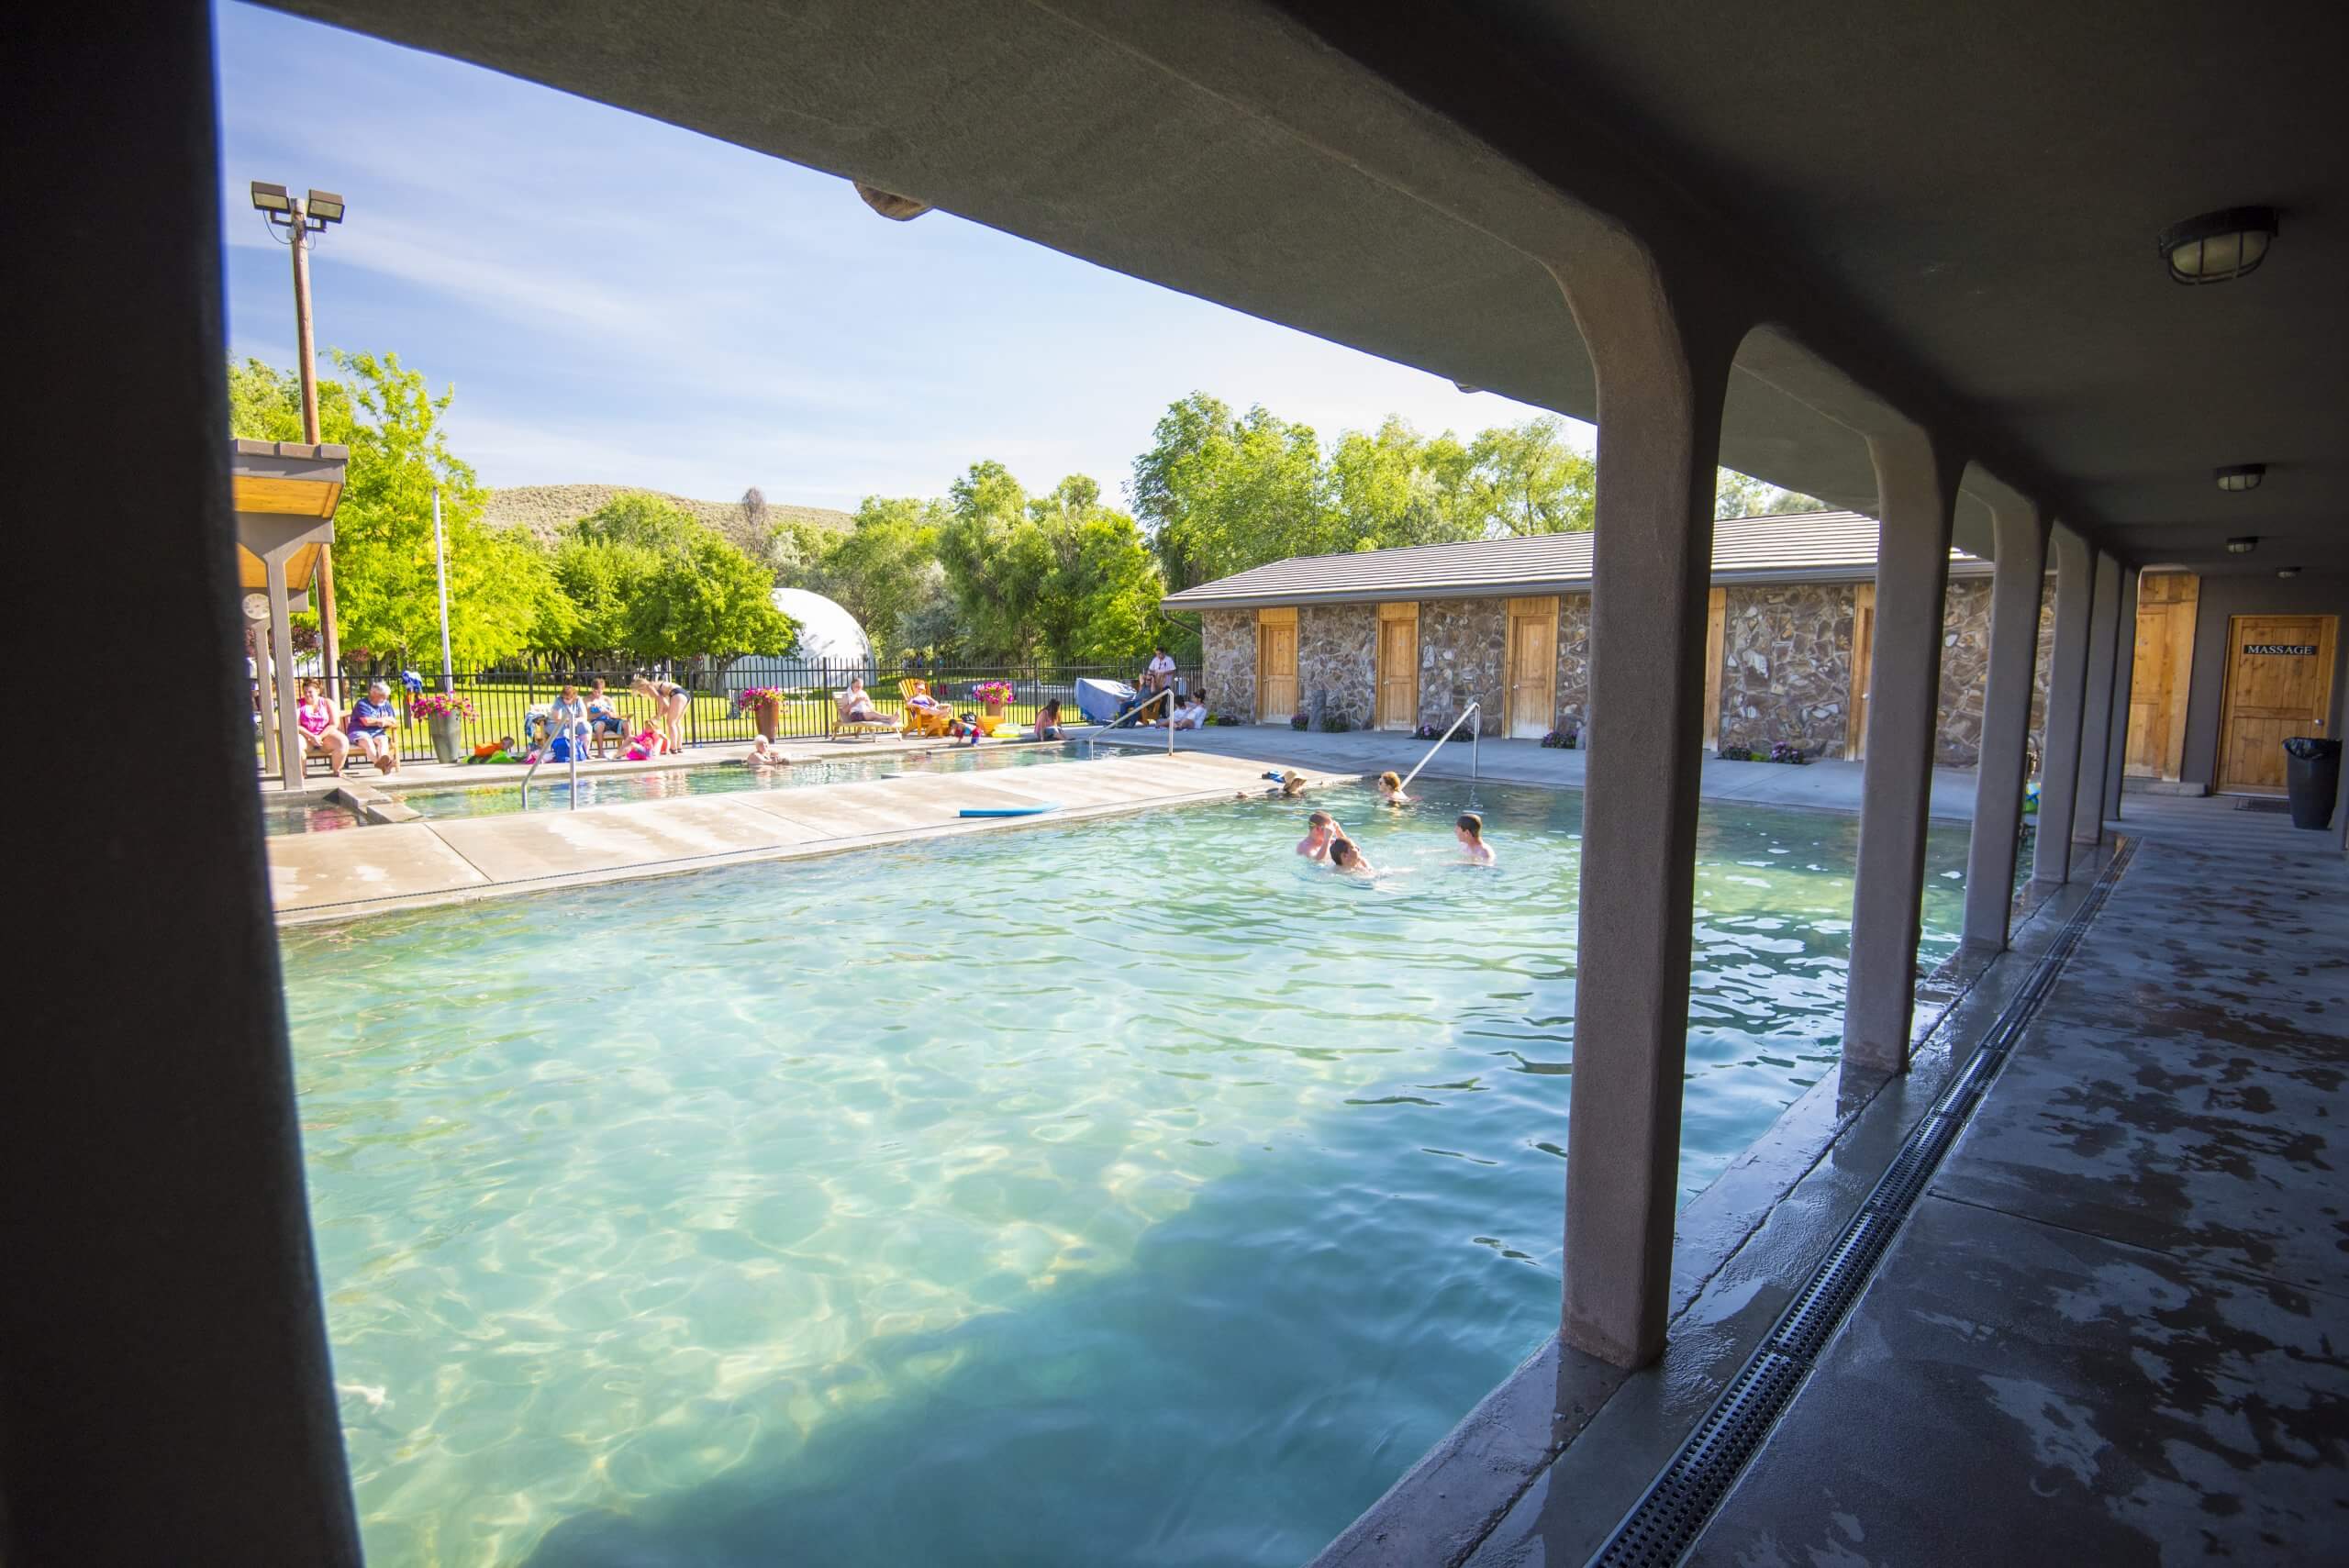 People enjoying Miracle Hot Springs in Buhl, Idaho.